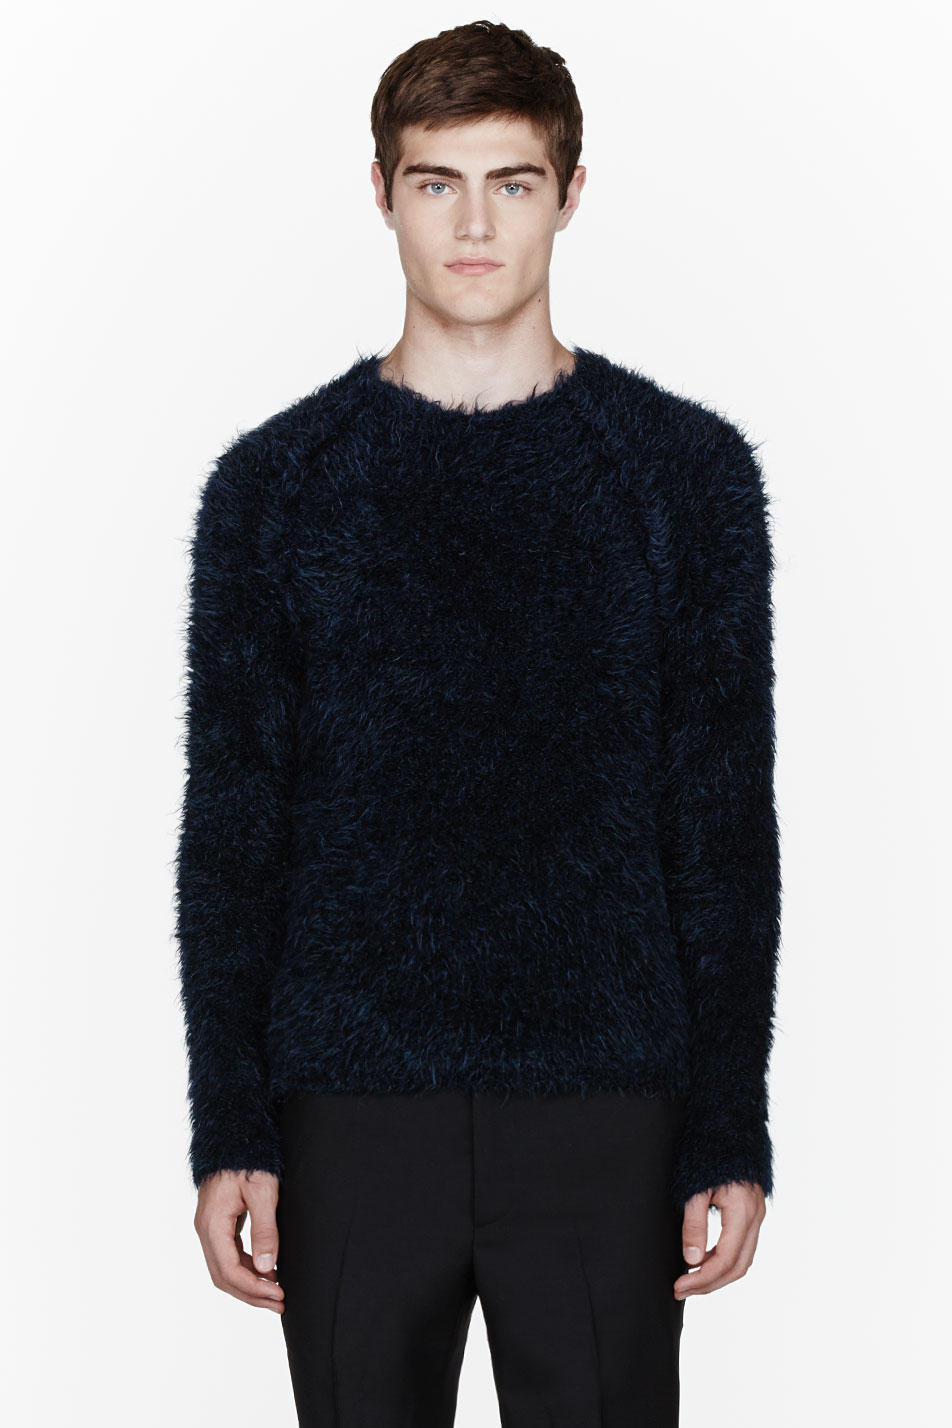 Lyst - Paul Smith Navy Blue Mohair Sweater in Black for Men